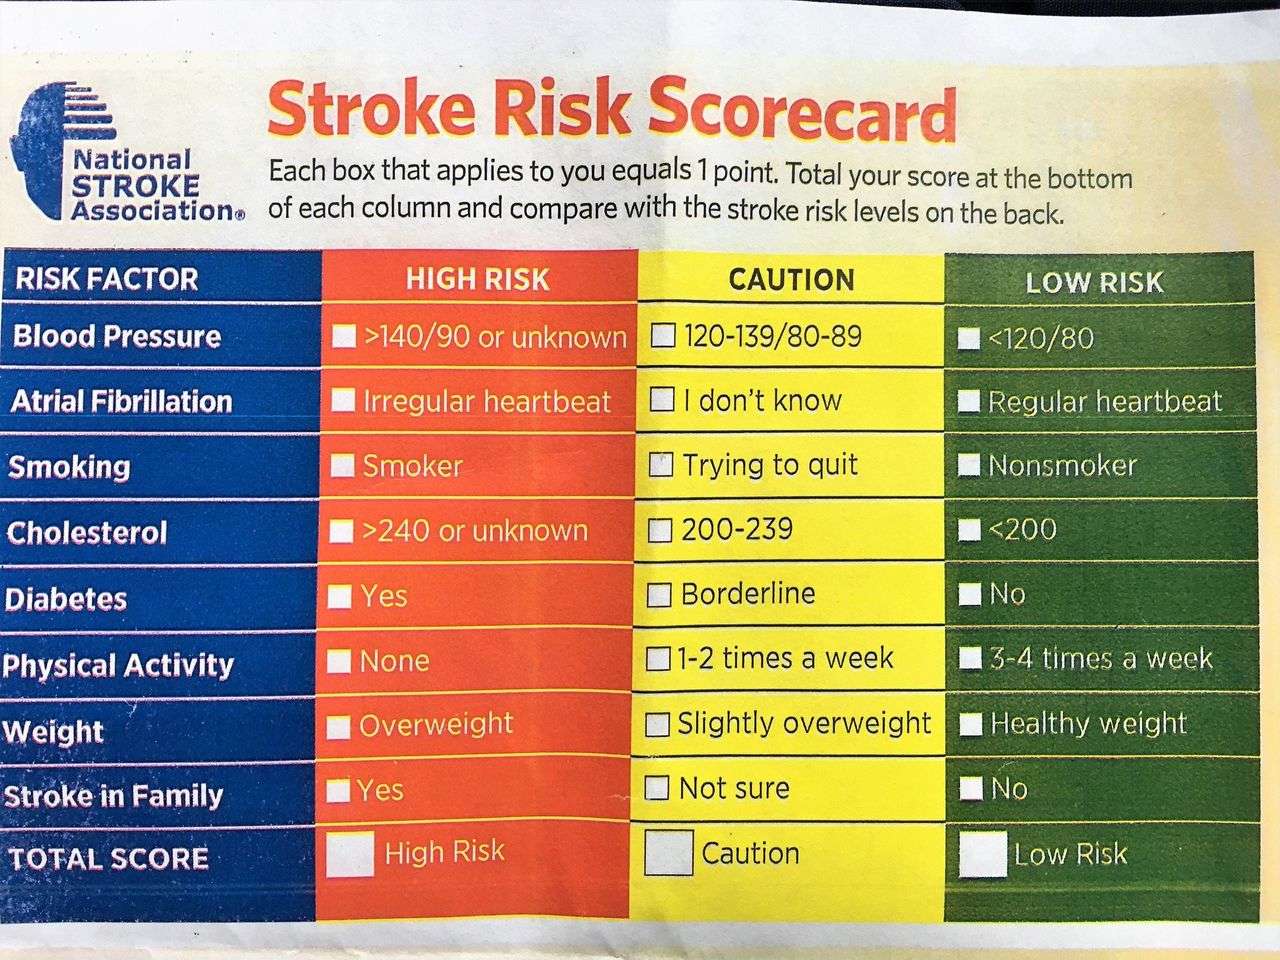 Stroke risk specialist: Don